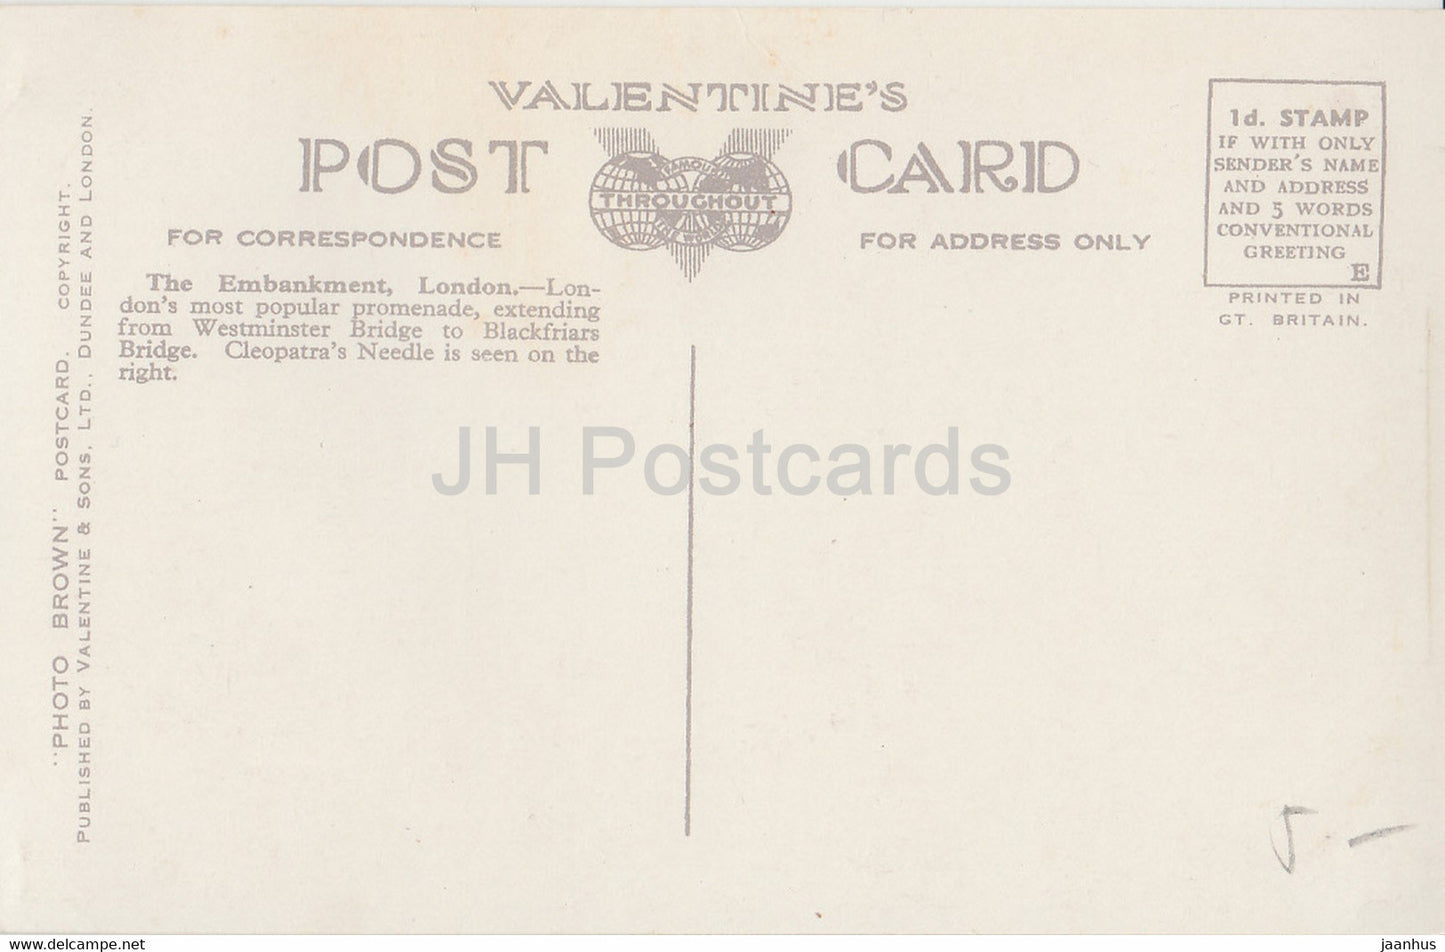 Londres - Thames Embankment - tram - voiture - Valentine - 2566 - carte postale ancienne - Angleterre - Royaume-Uni - inutilisé